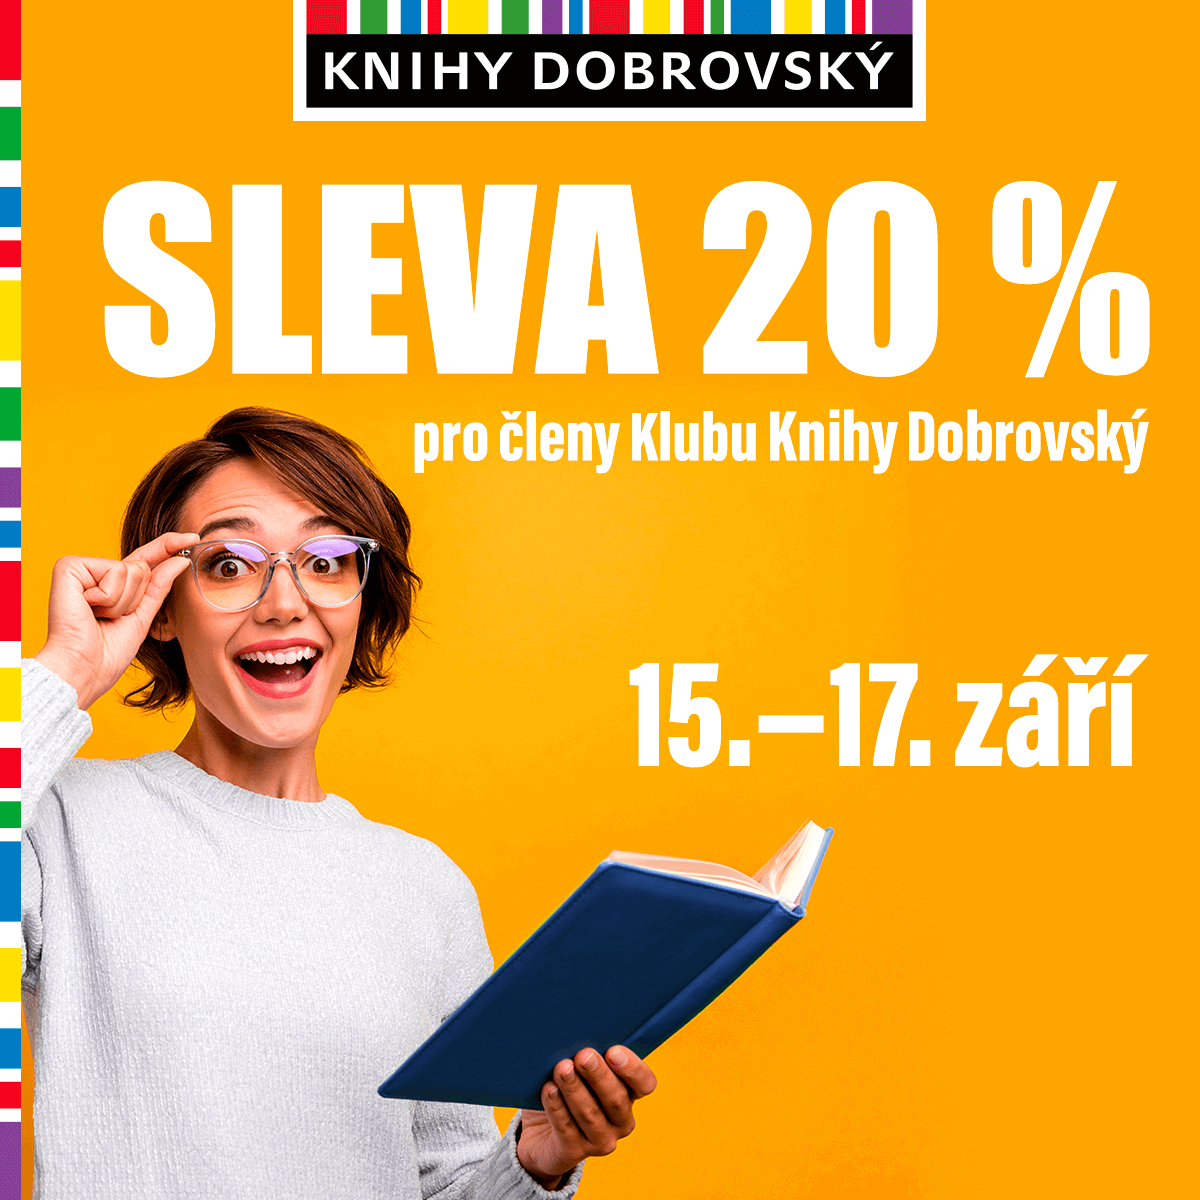 Sleva 20 % pro členy Klubu Knihy Dobrovský